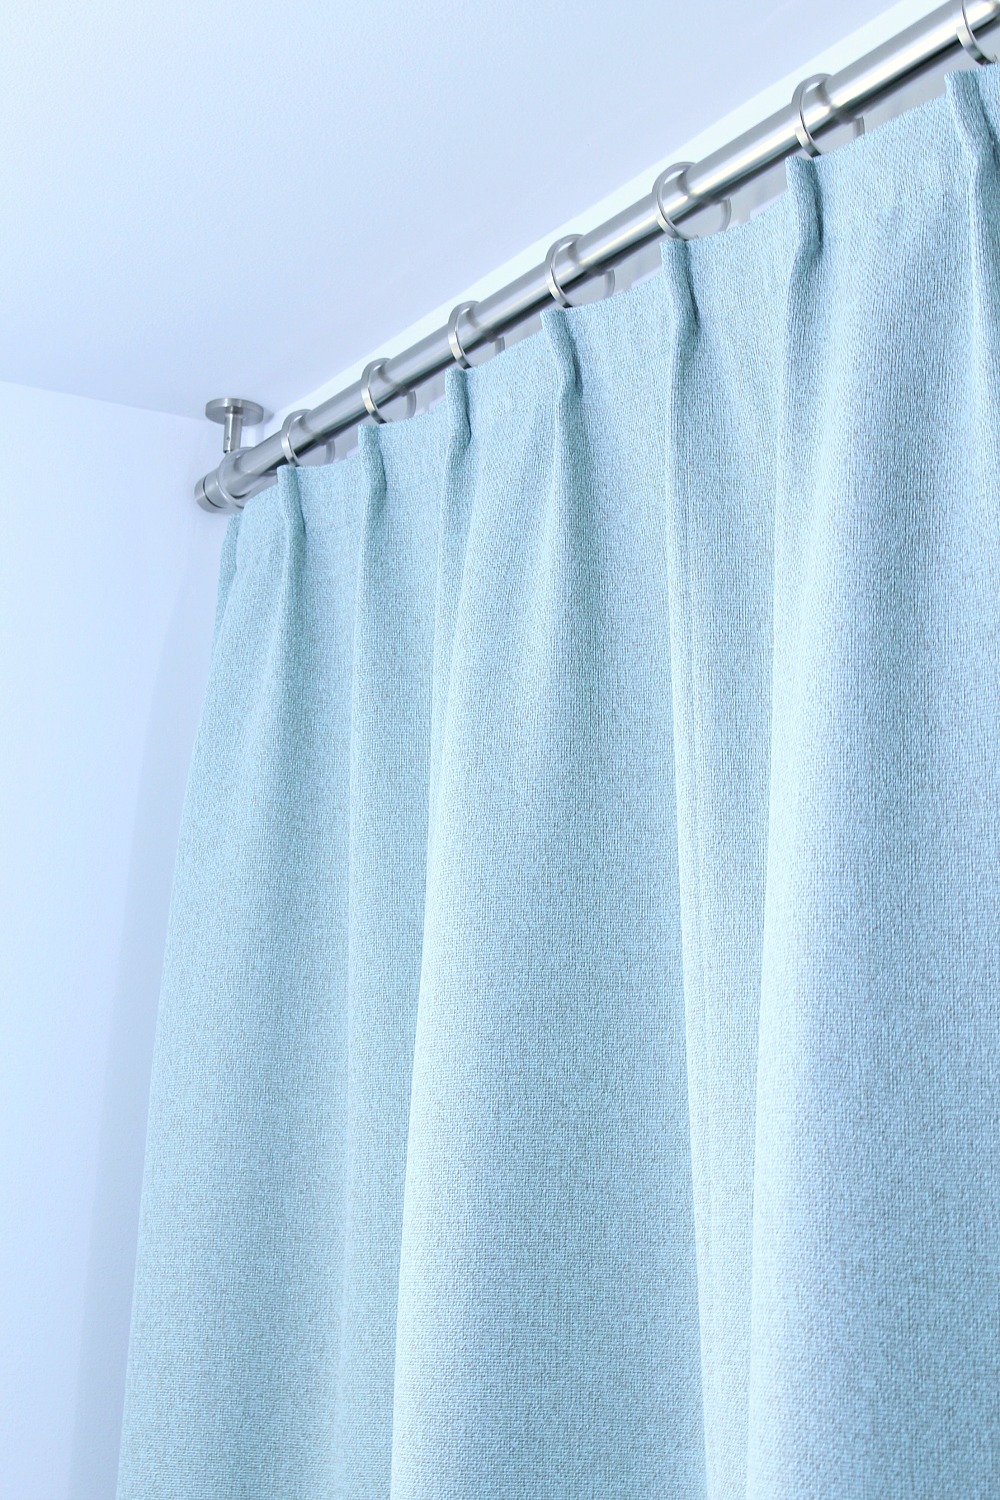 Bathroom Update: Ceiling Mounted Shower Curtain Rod + Turquoise ... - Ceiling Mounted Shower Curtain Rod + Turquoise Shower Curtain in Modern  Bathroom Reno | www.